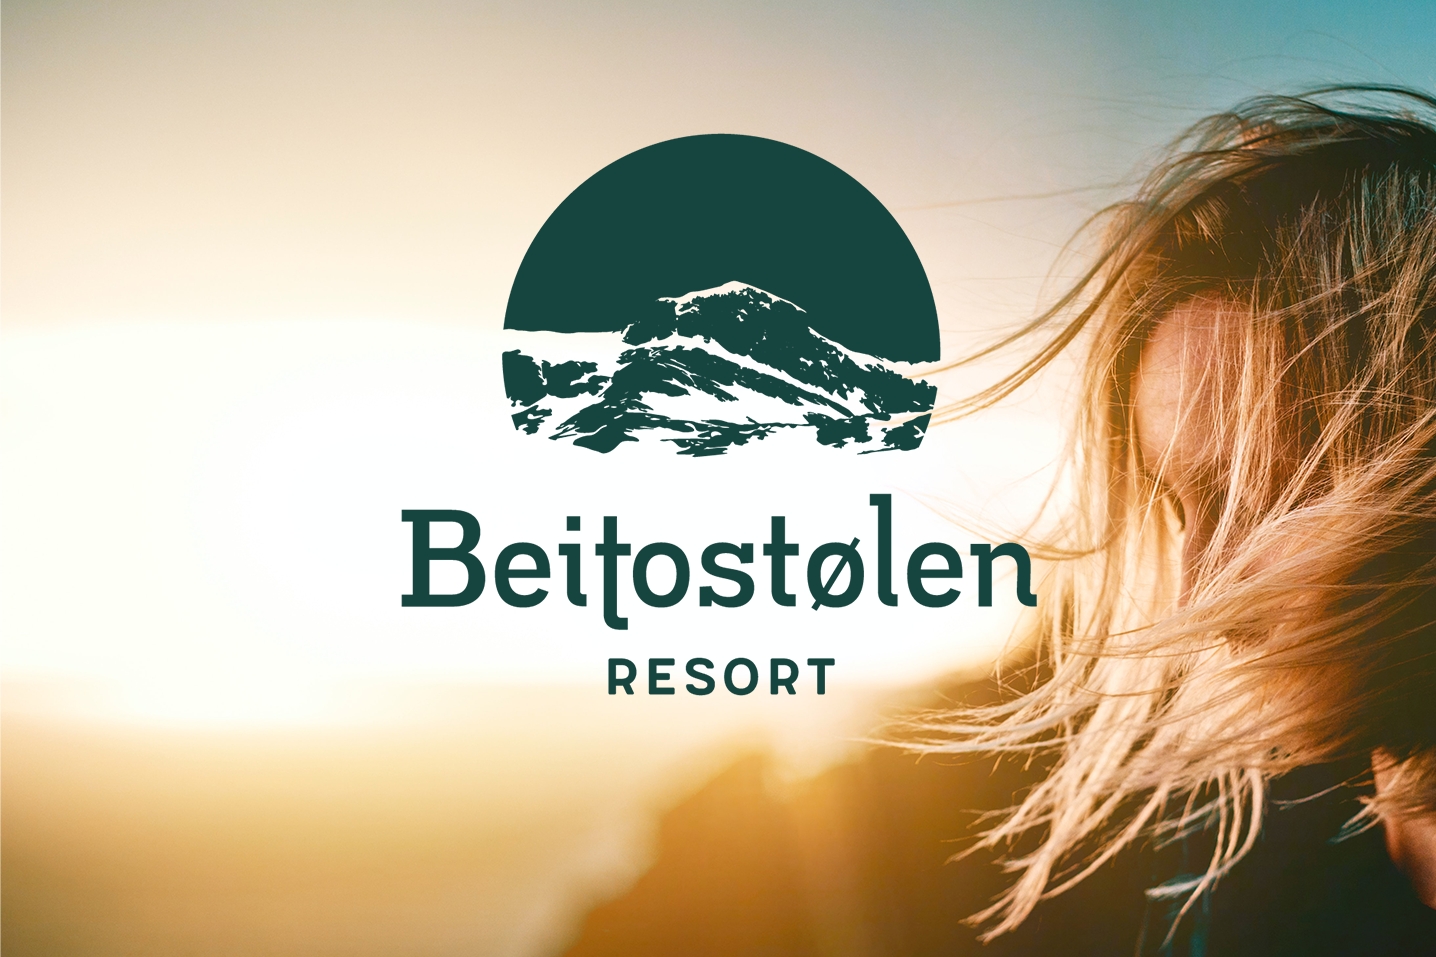 Beitostølen resort logo i mørk grønn på foto